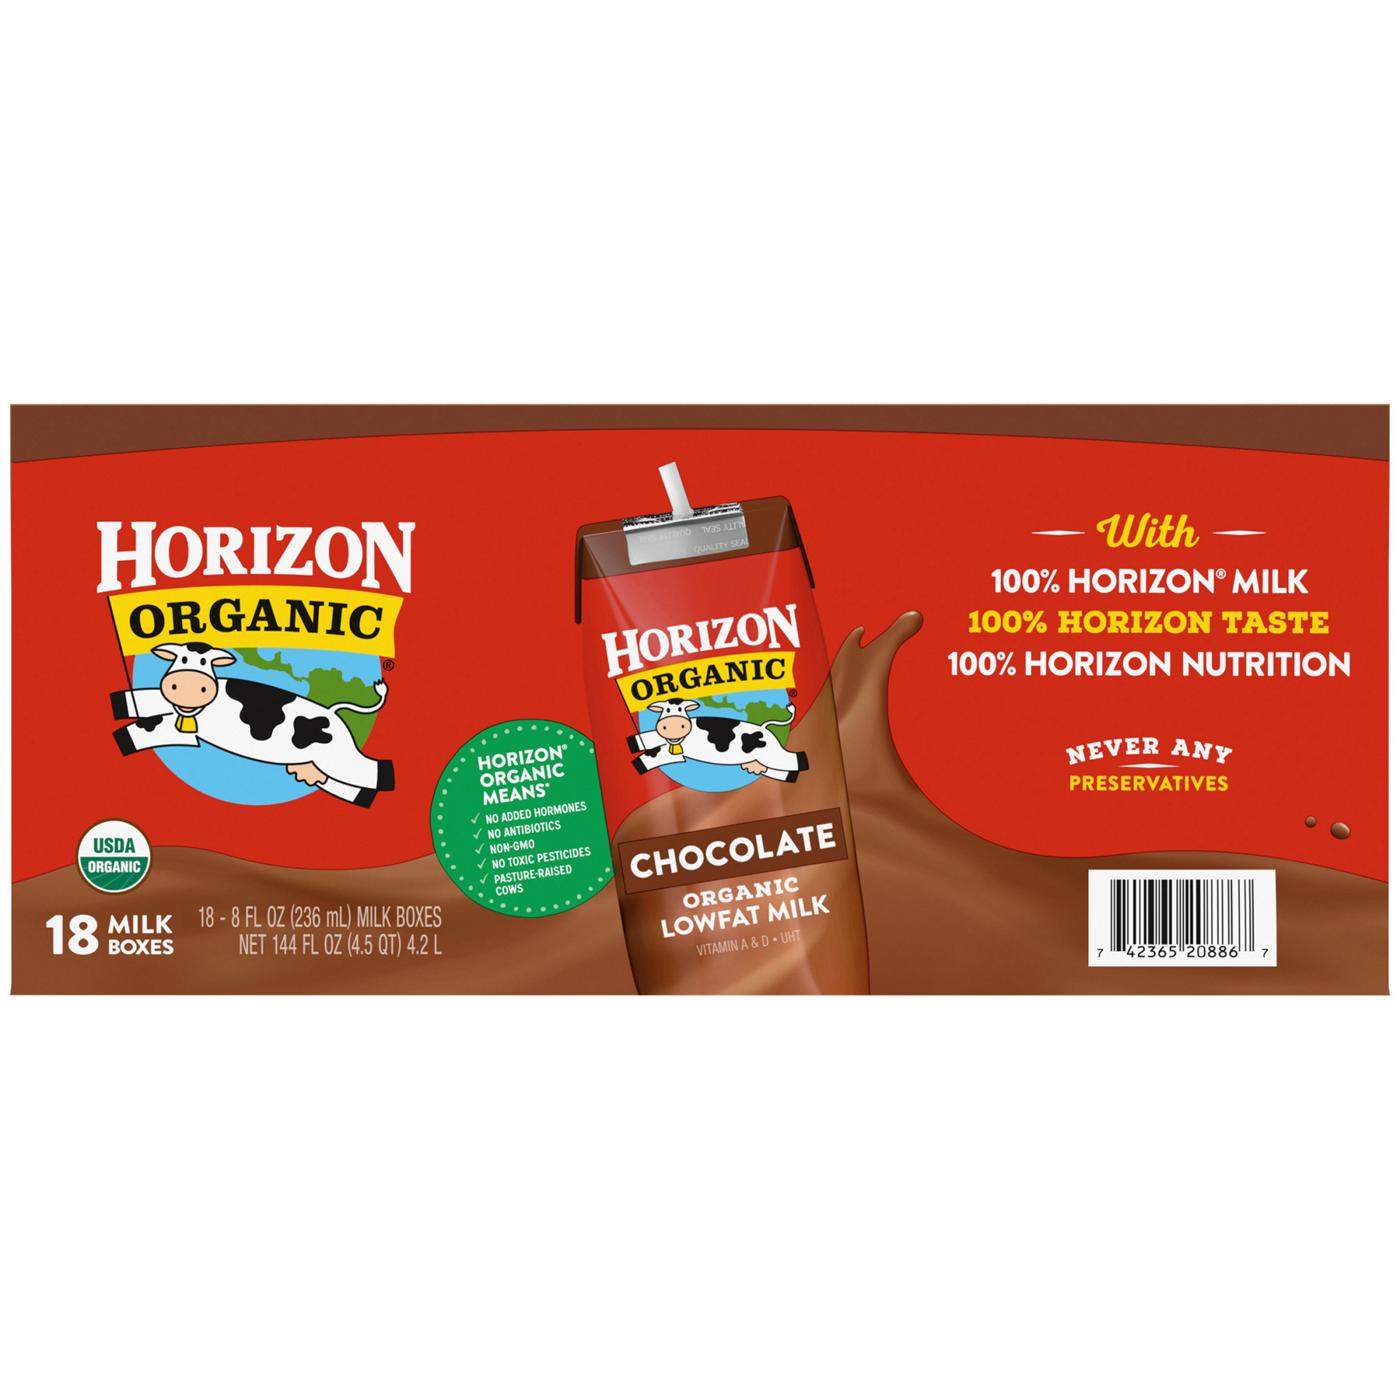 Horizon Organic 1% Lowfat Uht Chocolate Milk 8 oz Cartons; image 6 of 8